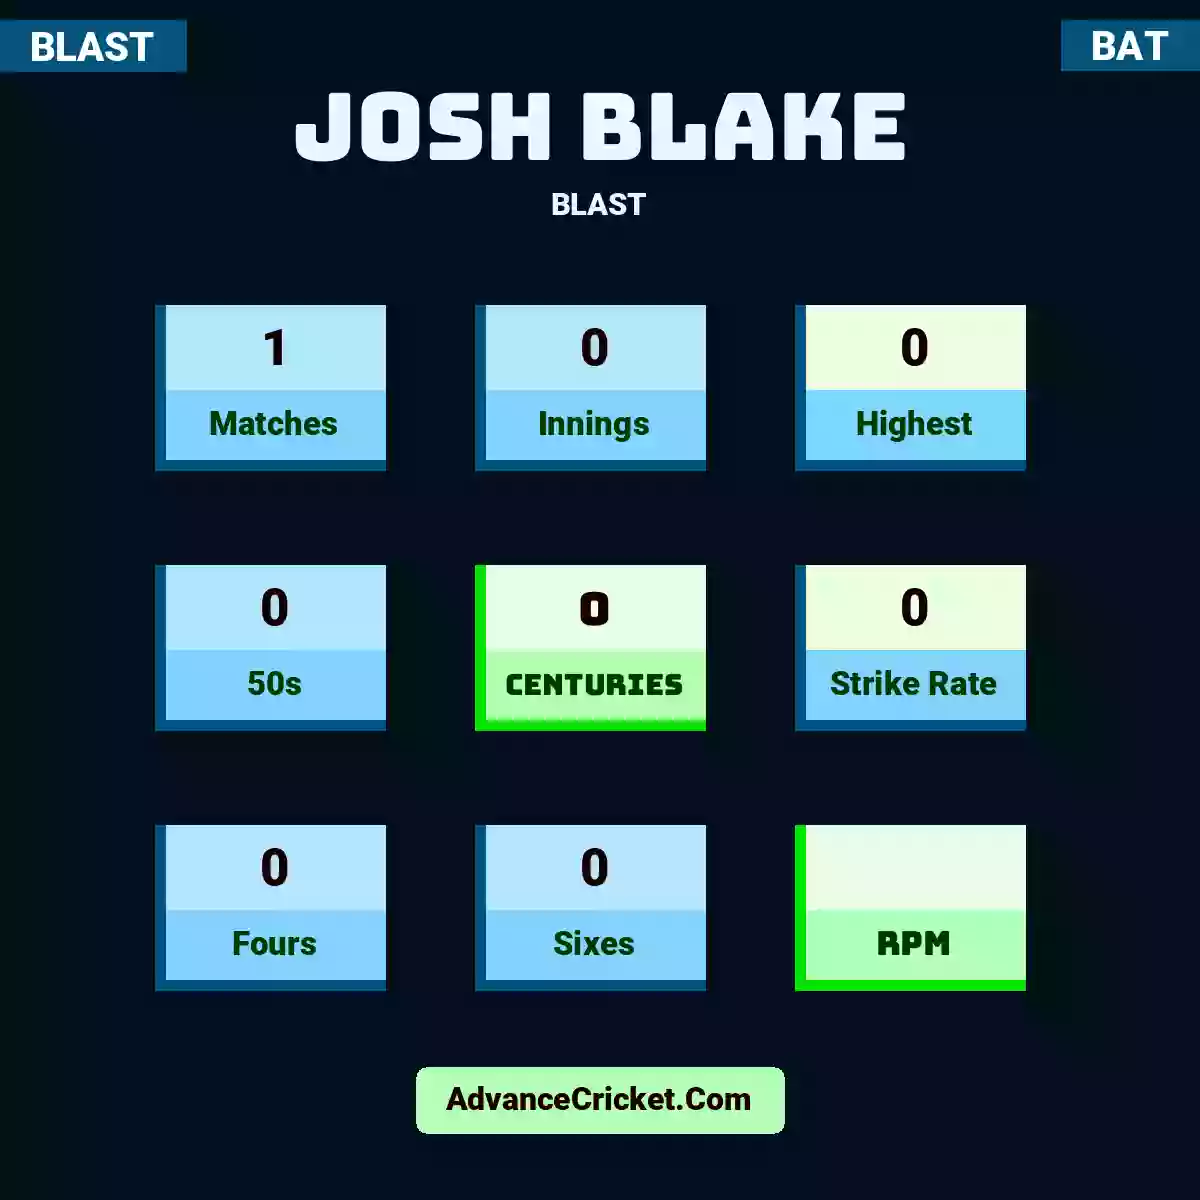 Josh Blake BLAST , Josh Blake played 1 matches, scored 0 runs as highest, 0 half-centuries, and 0 centuries, with a strike rate of 0. J.Blake hit 0 fours and 0 sixes.